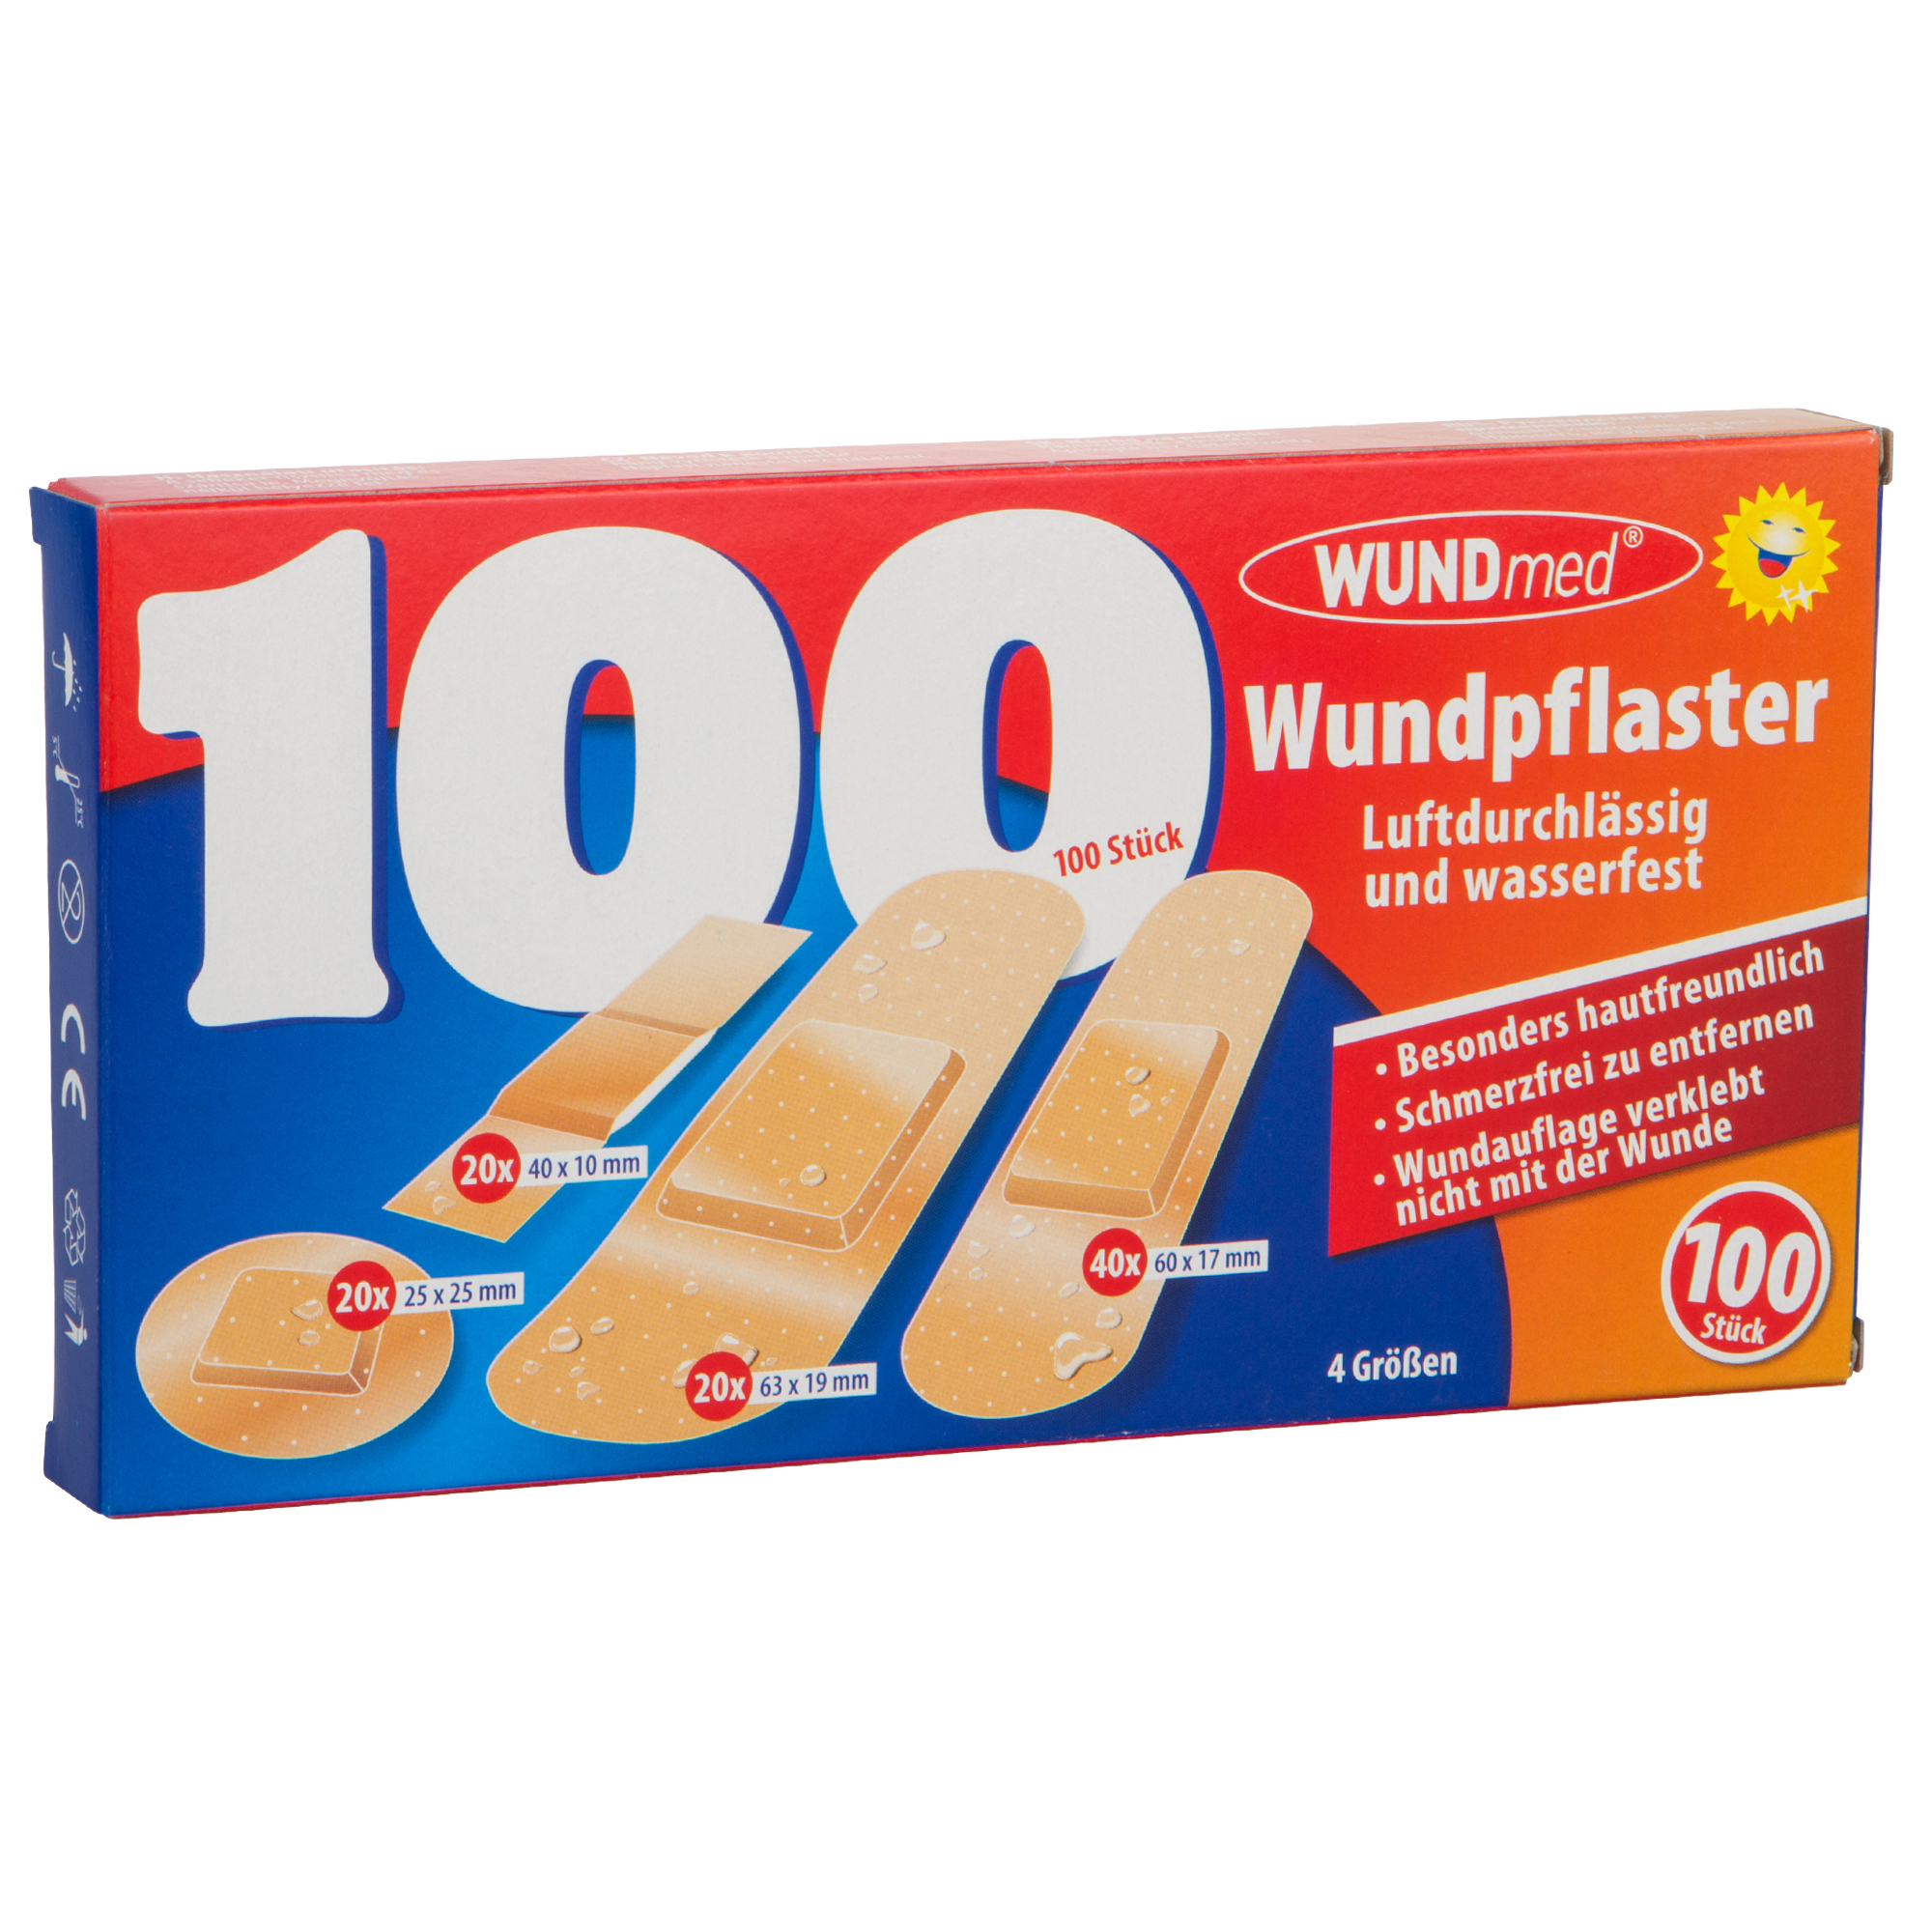 WUNDmed® Wundpflaster 100 Stück sortiert in 4 Größen